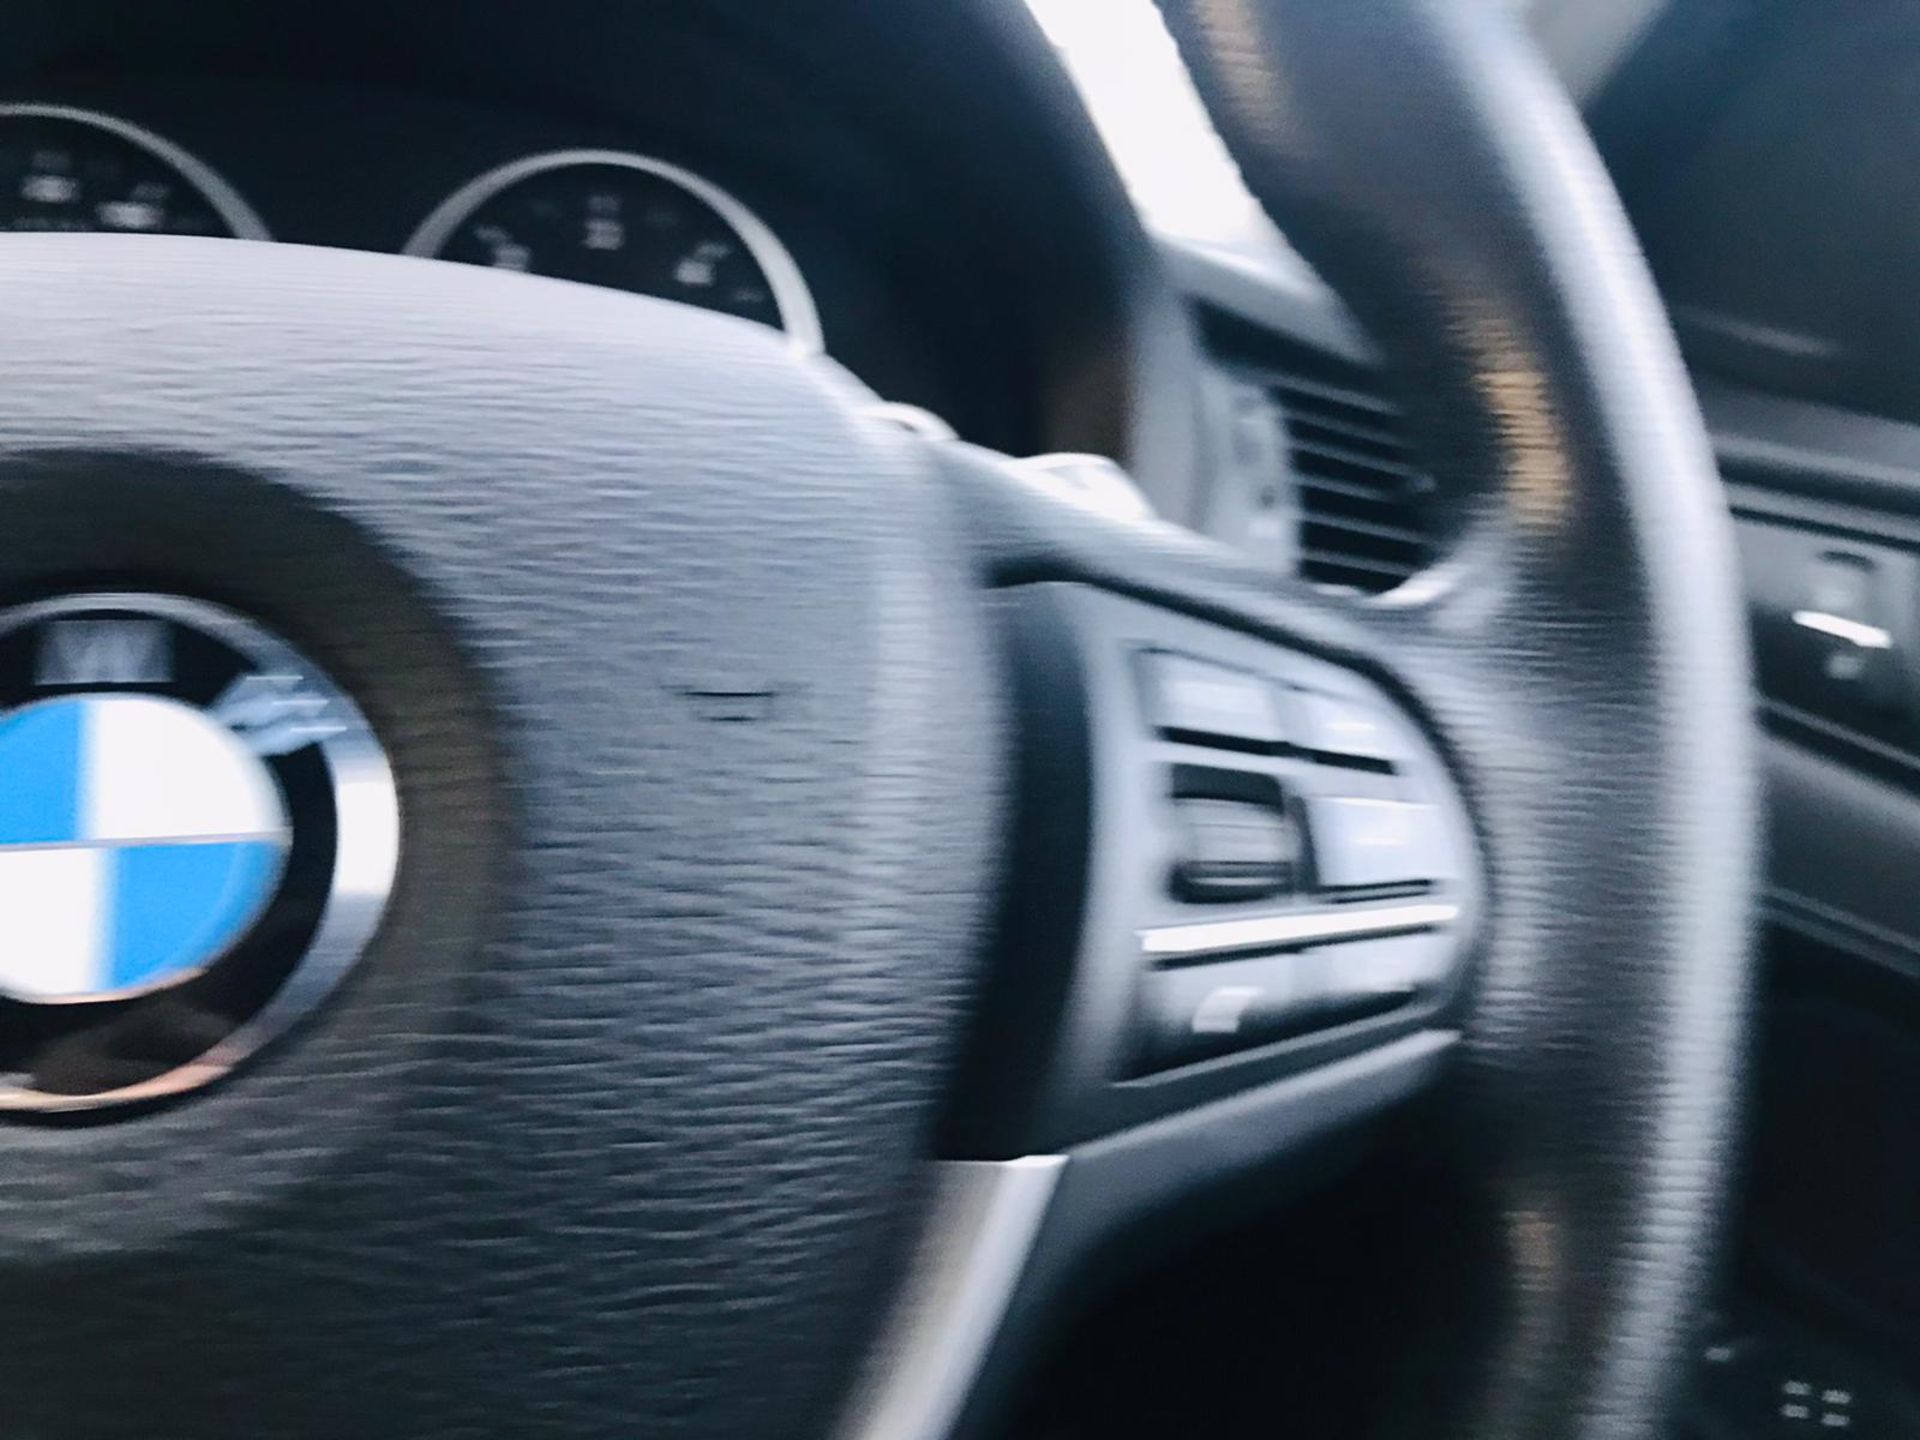 (RESERVE MET) BMW X4 20d xDrive Special Equipment Auto - 2018 Model - Black Leather - Sat Nav - - Image 20 of 34